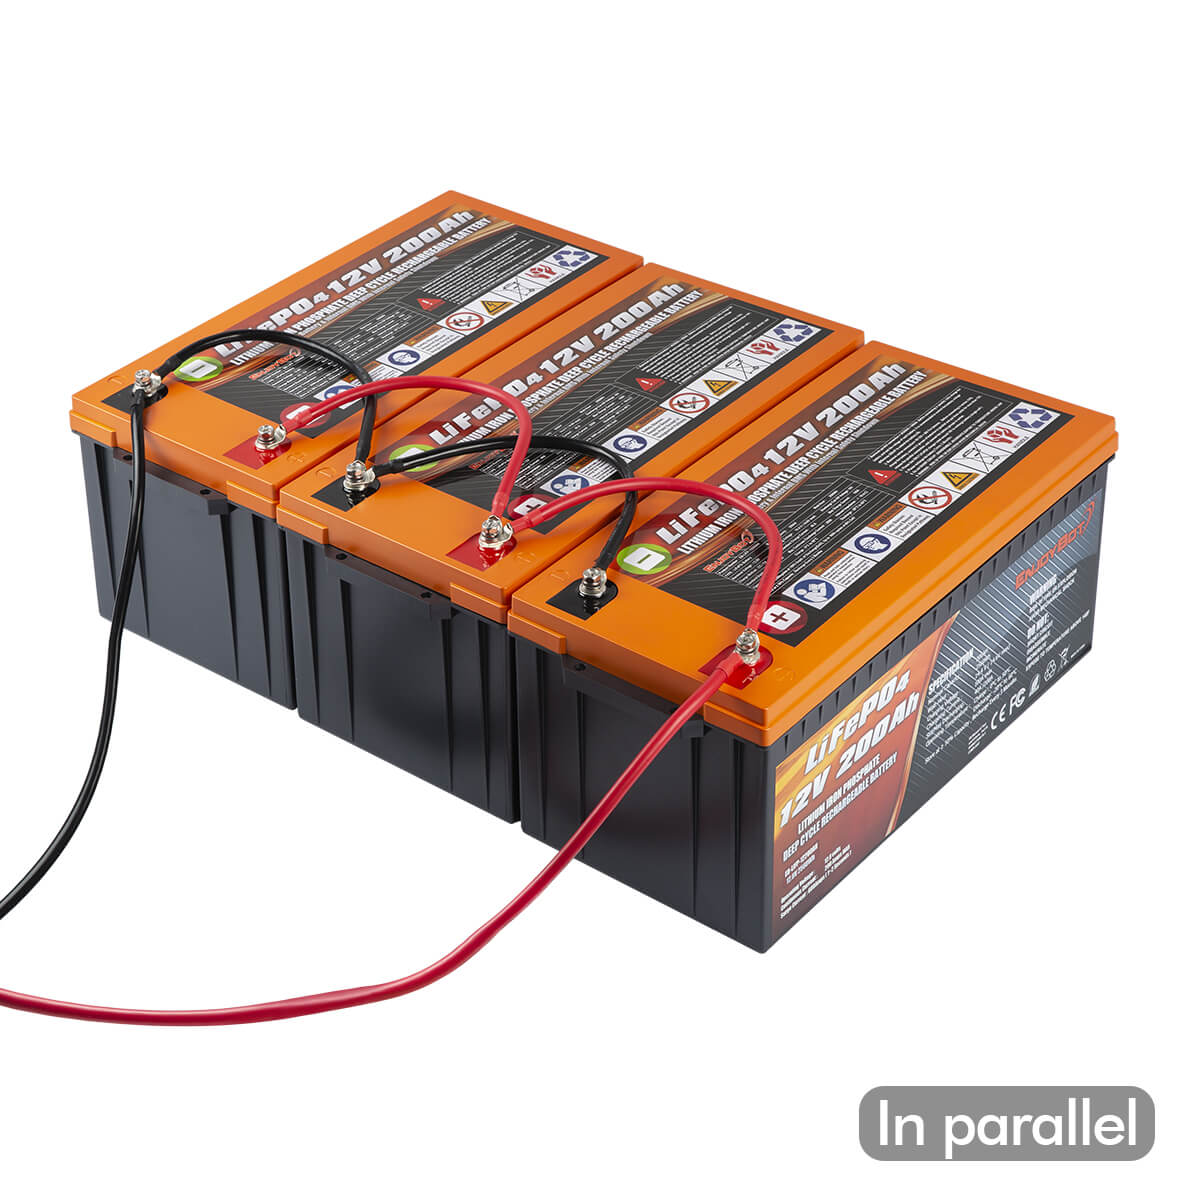 Enjoybot Lithium-Batterie 36 V 200 Ah für Marine Trolling-Motor